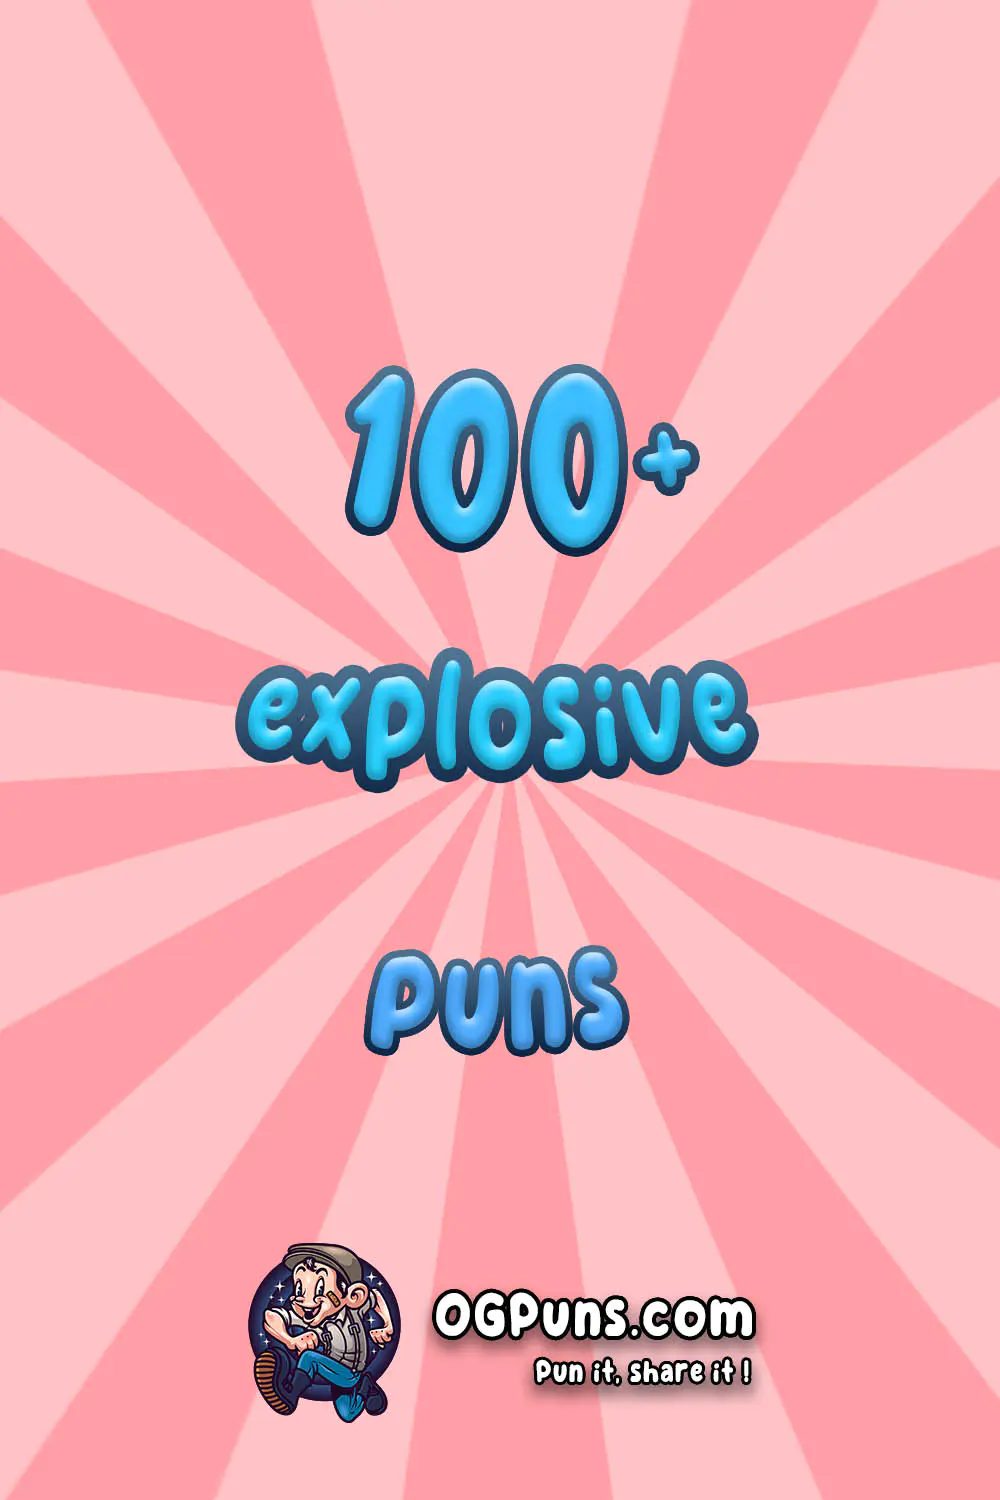 Explosive puns Image for Pinterest